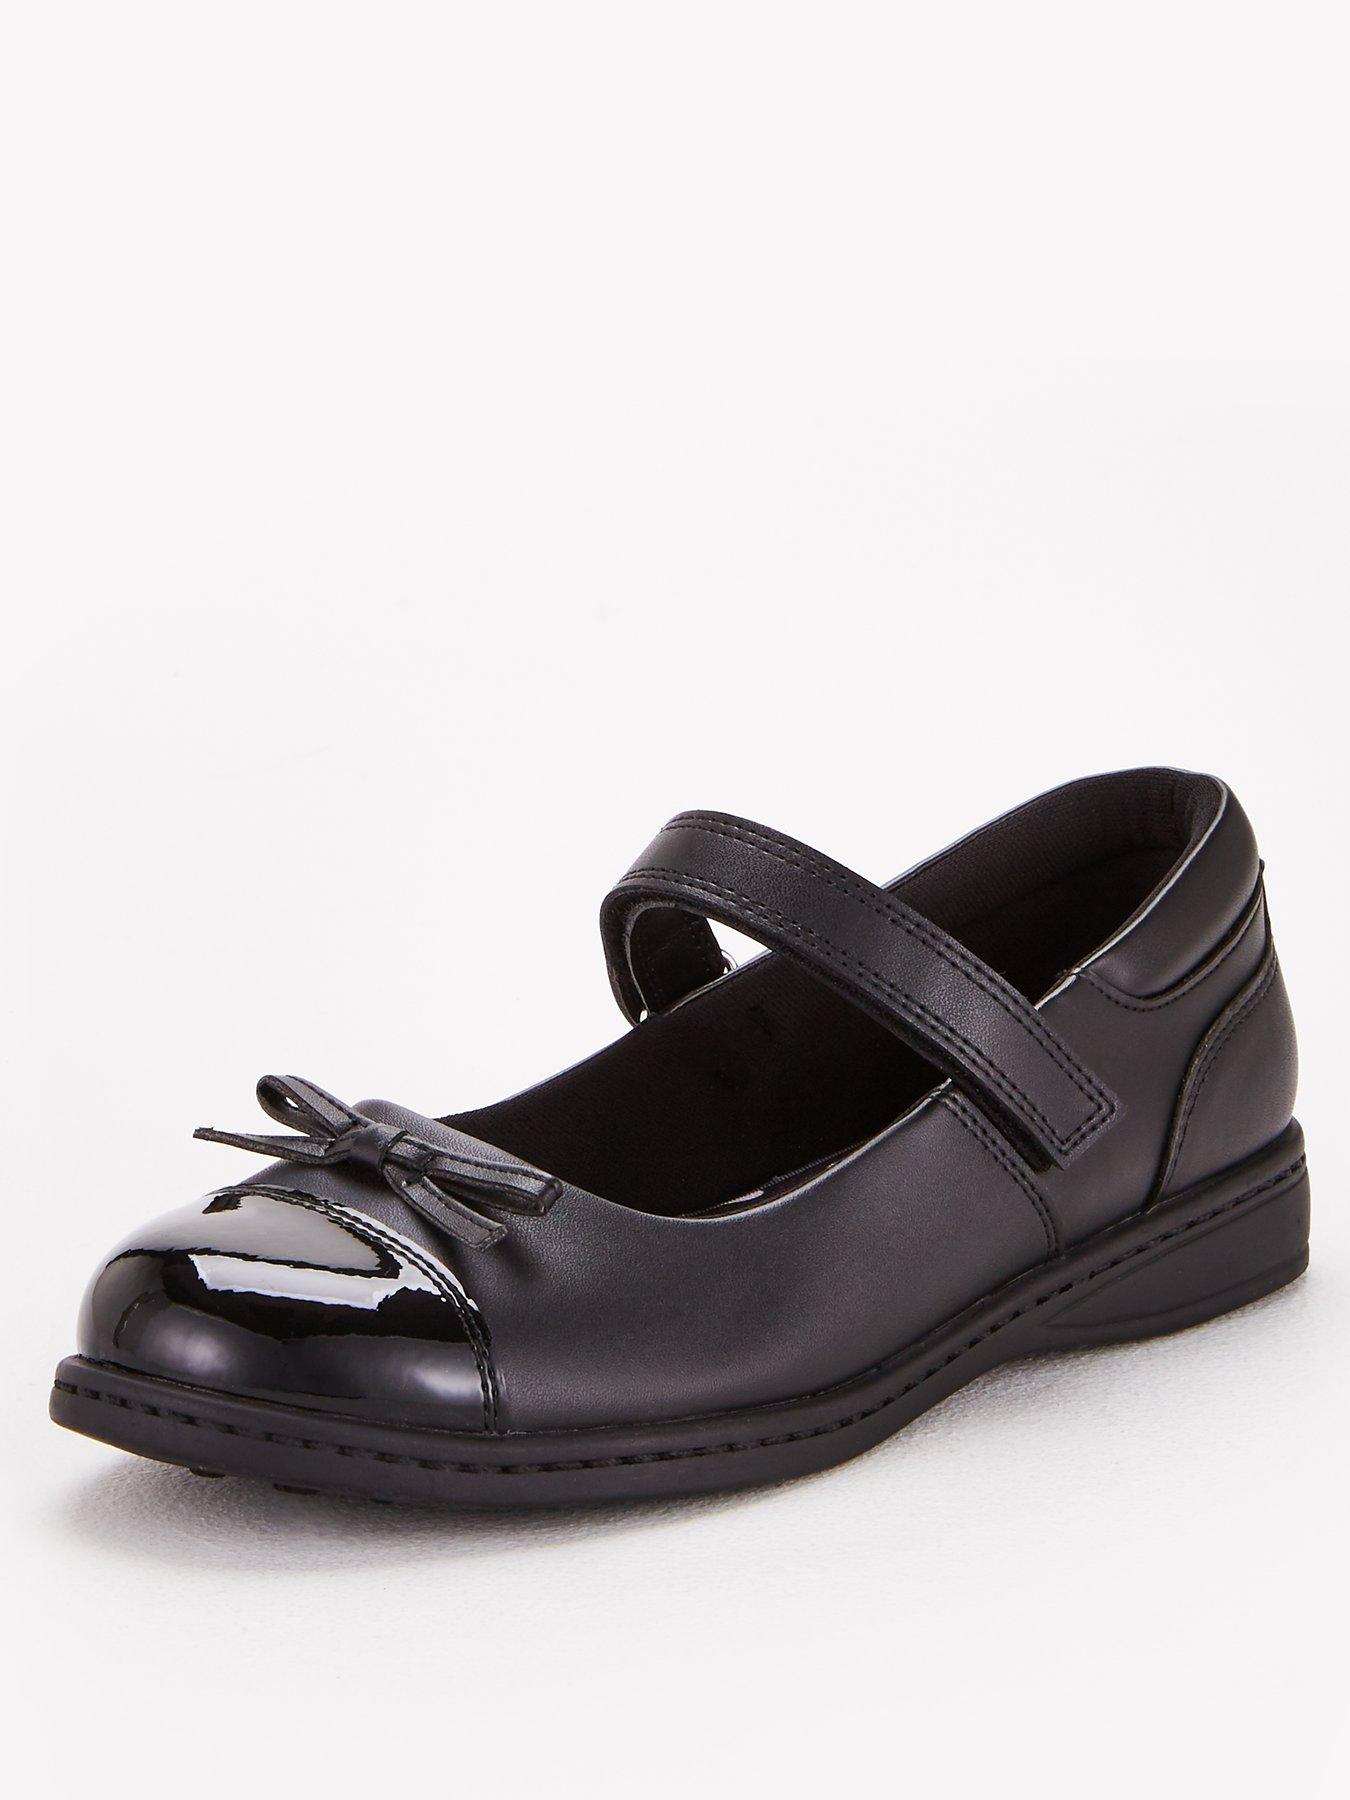 Stylozuk Girls Fringe Loafers Shoes Kids Black School Formal Shoes Size UK 13 1 2 3 4 5 